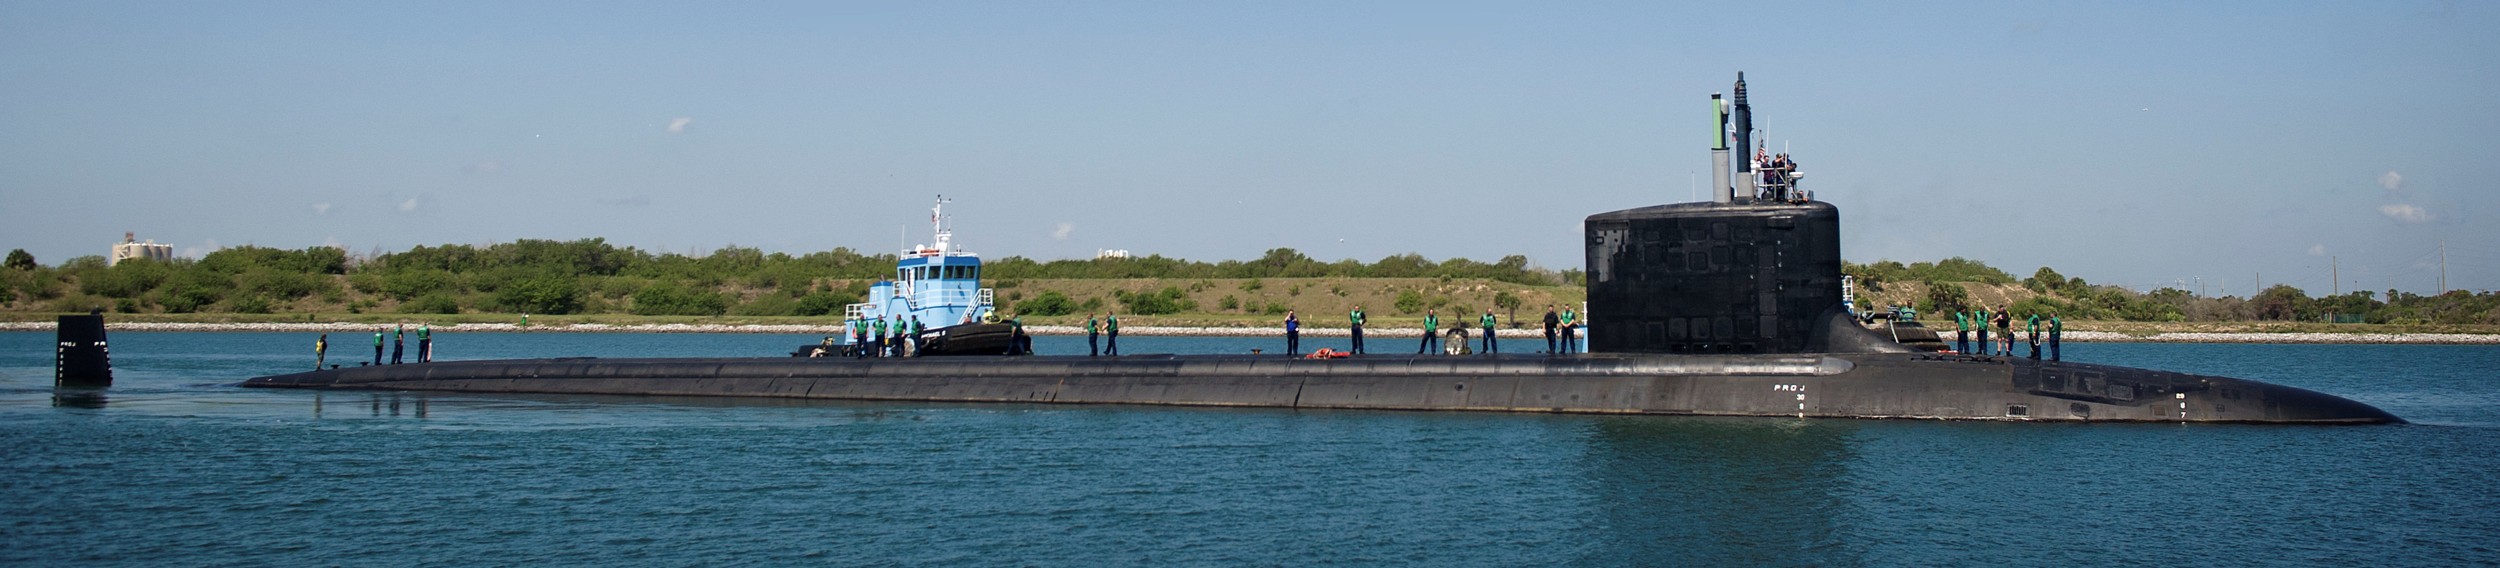 ssn-782 uss mississippi virginia class attack submarine us navy 24